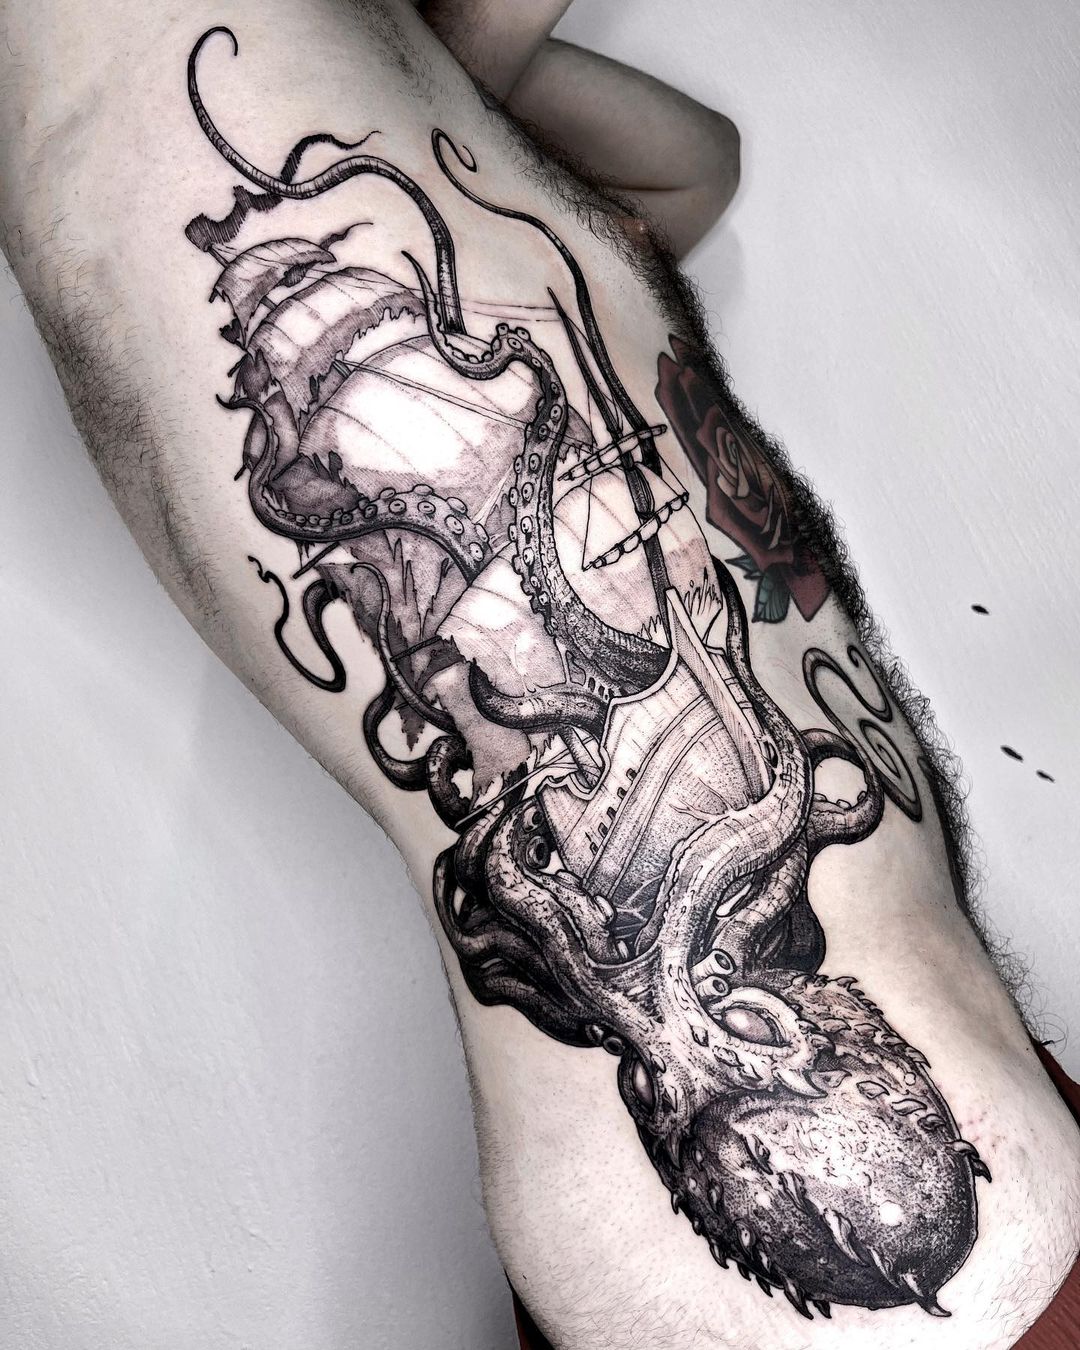 Kraken Tattoo on Body  Best Tattoo Ideas Gallery